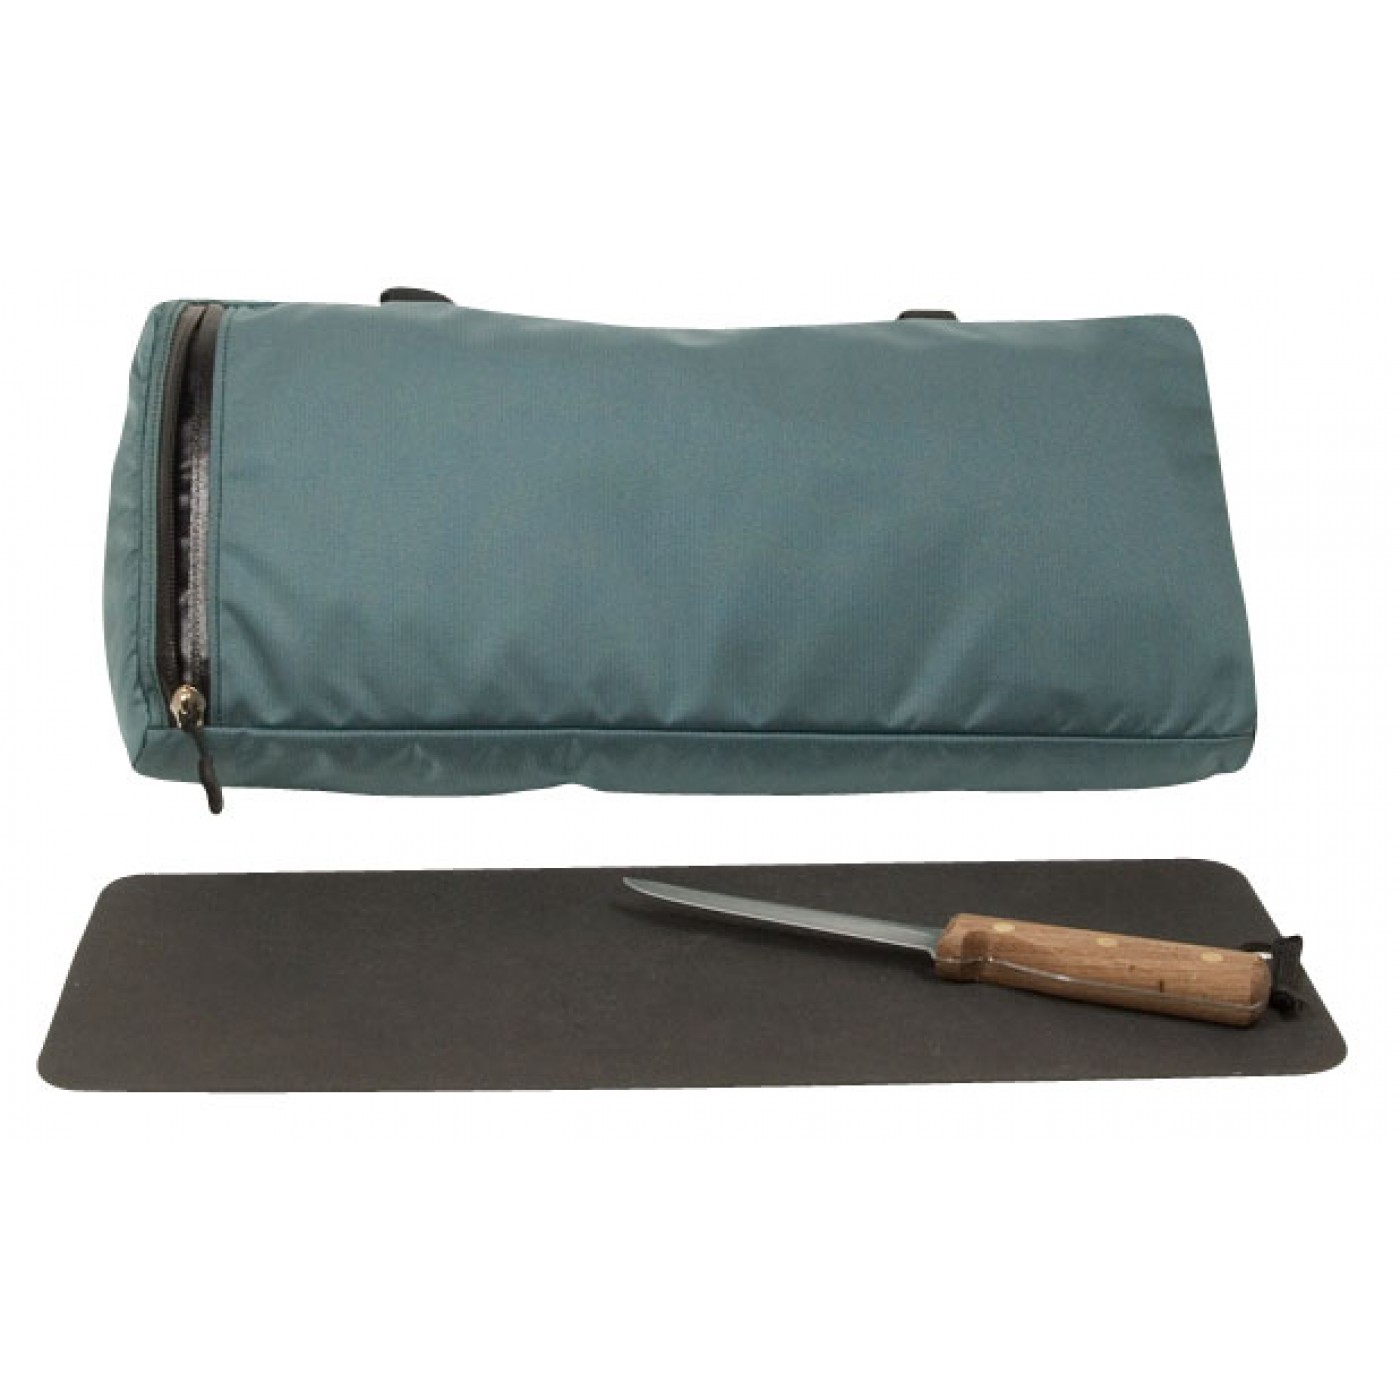 Lg Wedge Thwart Bag-Smoke Blue | Canoe Accessories | Granite Gear